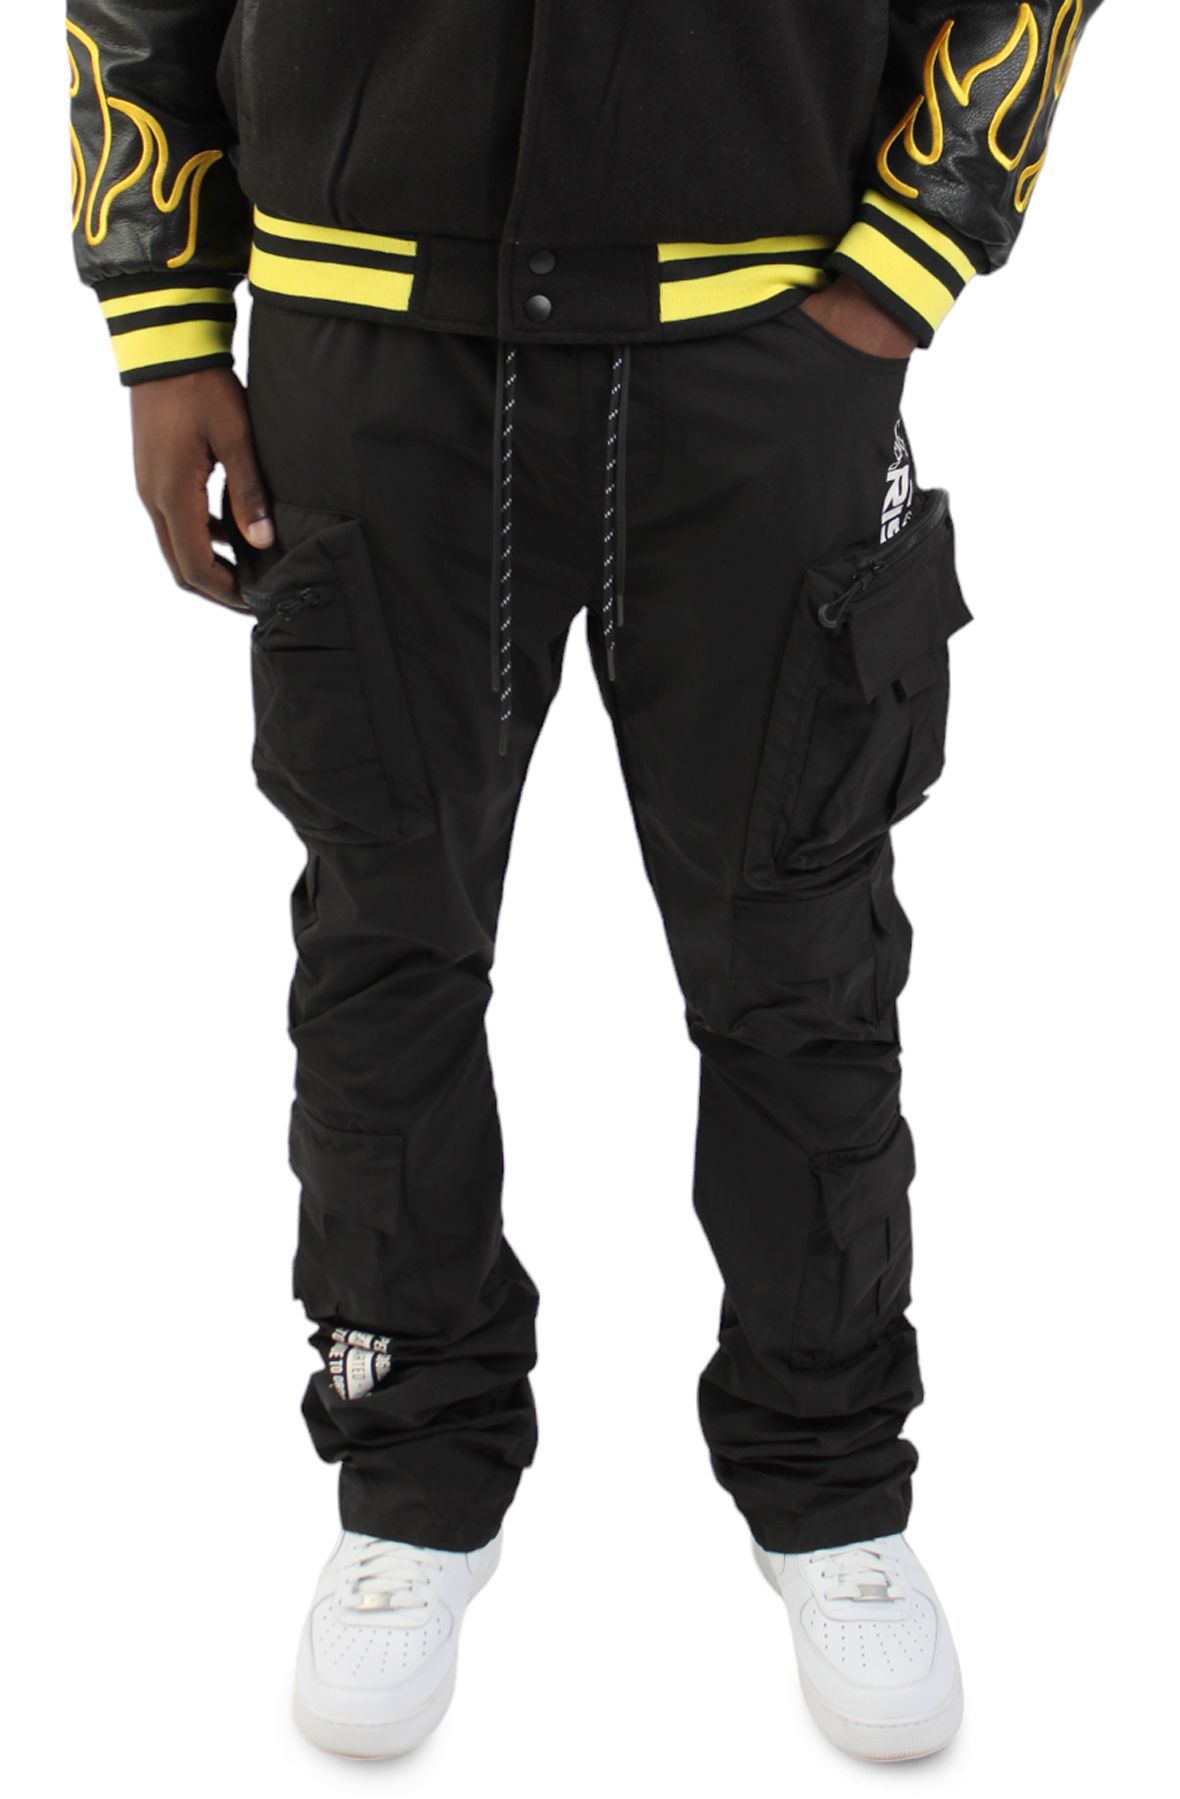 Shop Preme Stacked Multi Pocket Cargo Pants PRWB1356-BLK black